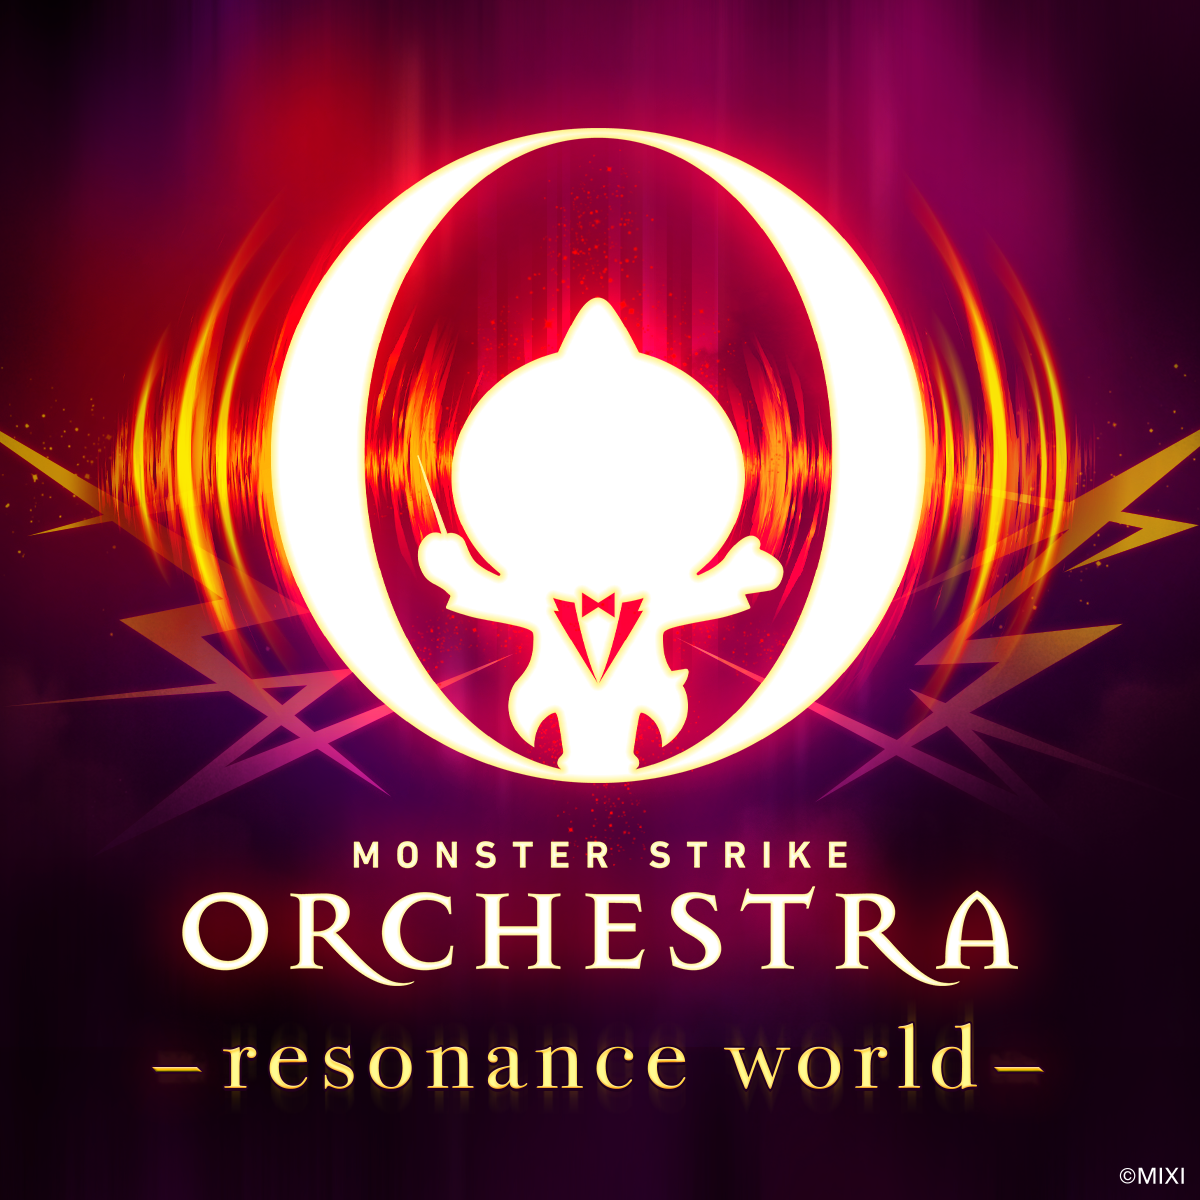 
MONSTER STRIKE ORCHESTRA -resonance world-
